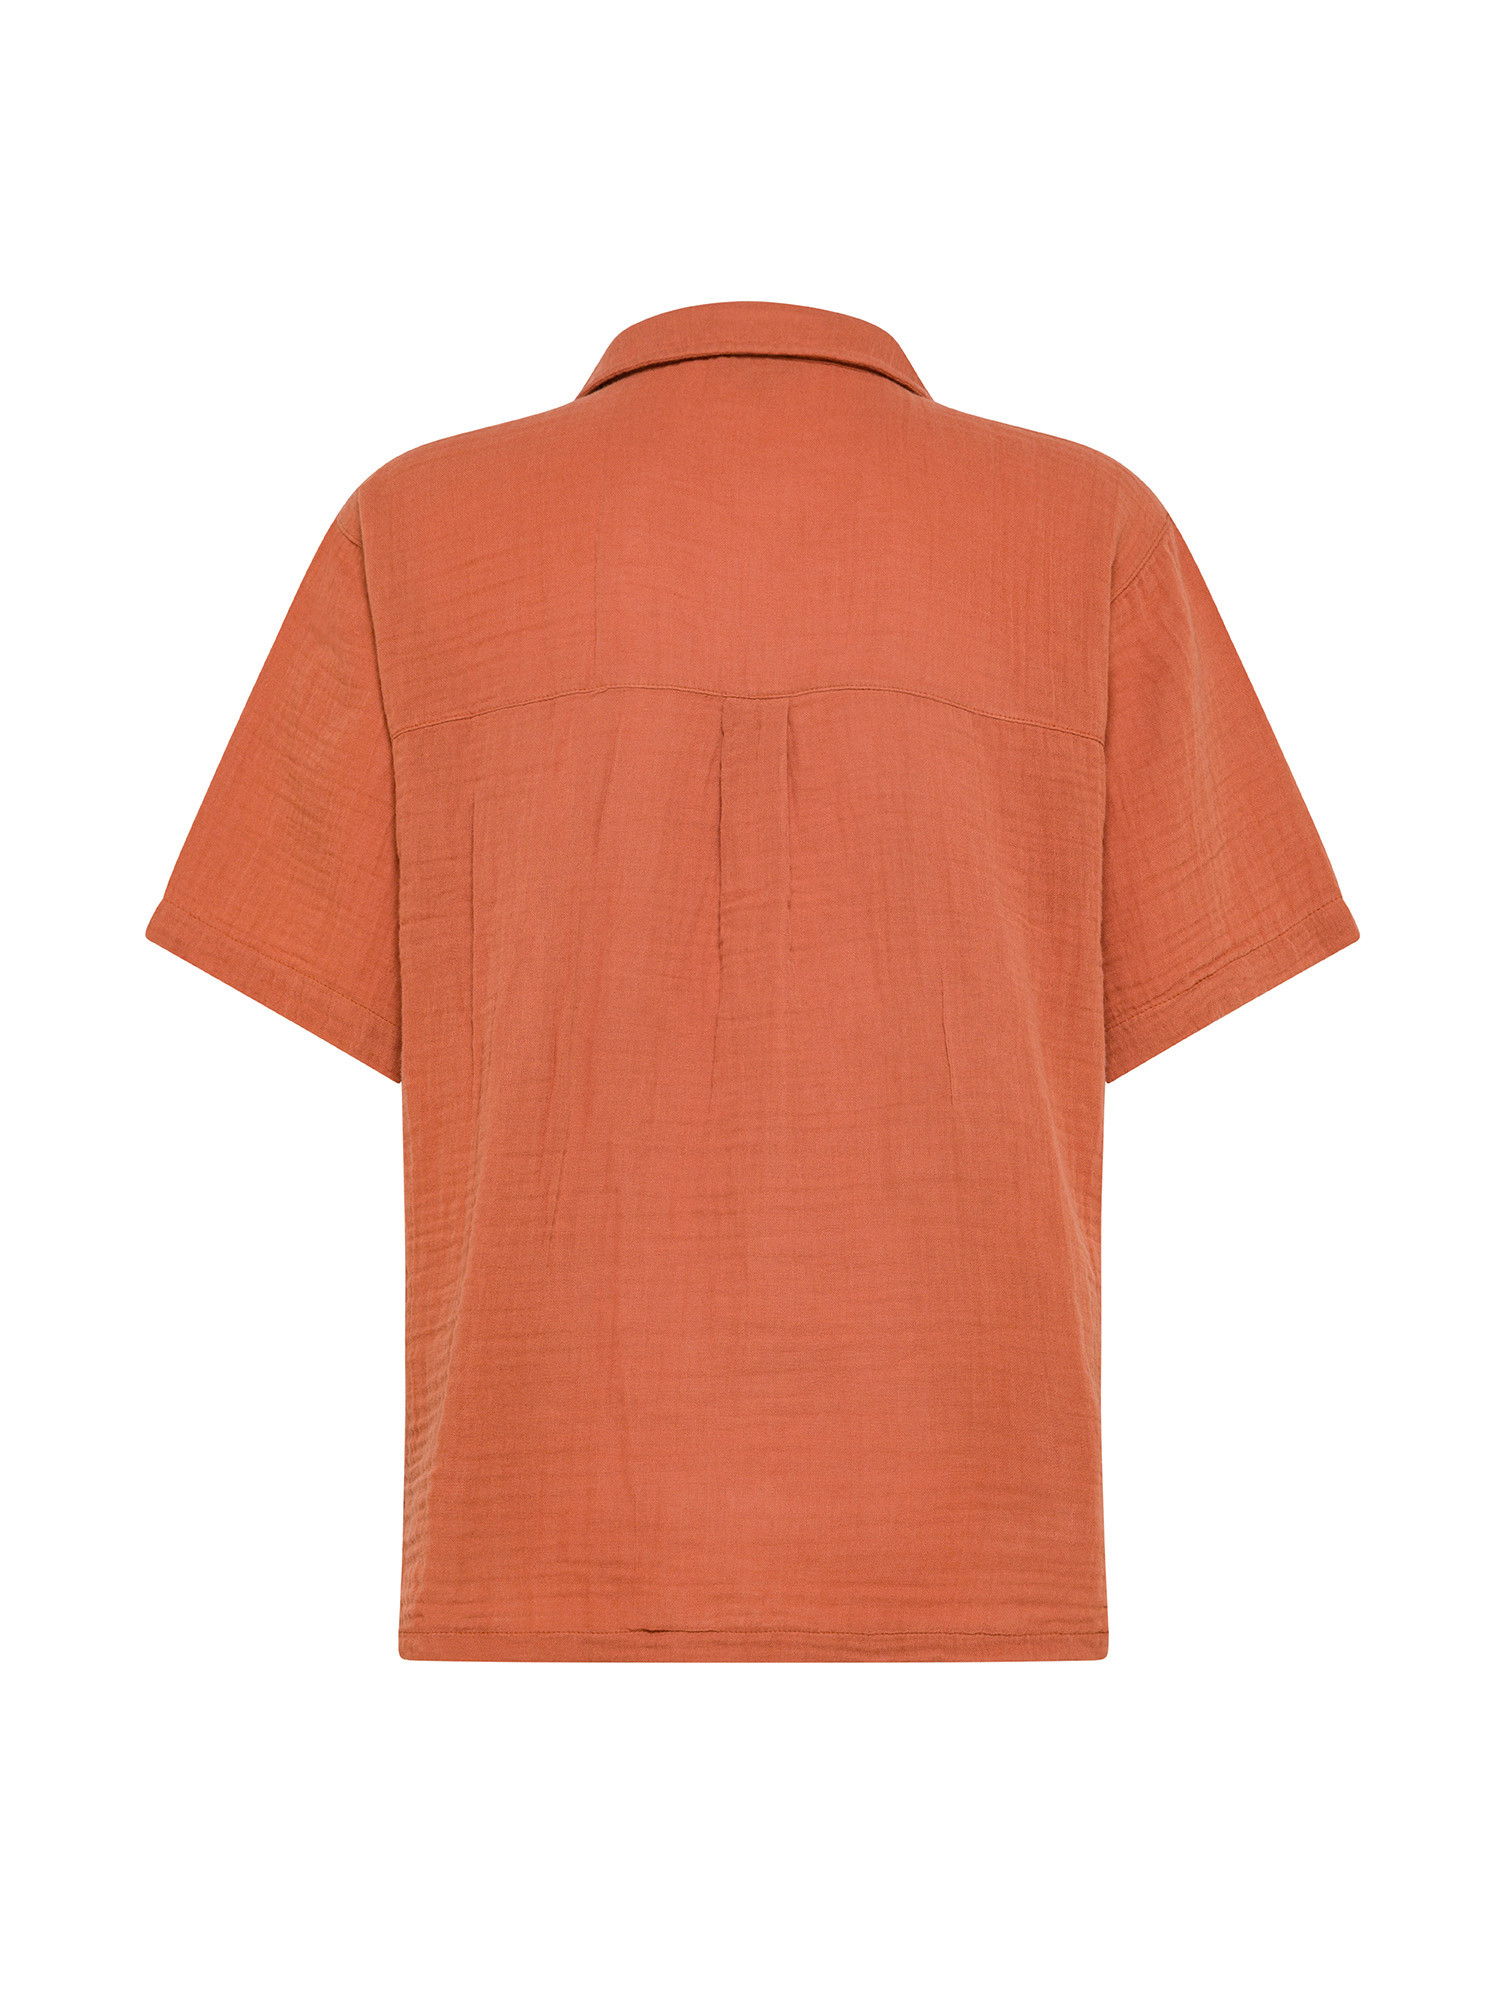 Camicia in mussola di cotone mezza manica., Arancione ambra, large image number 1